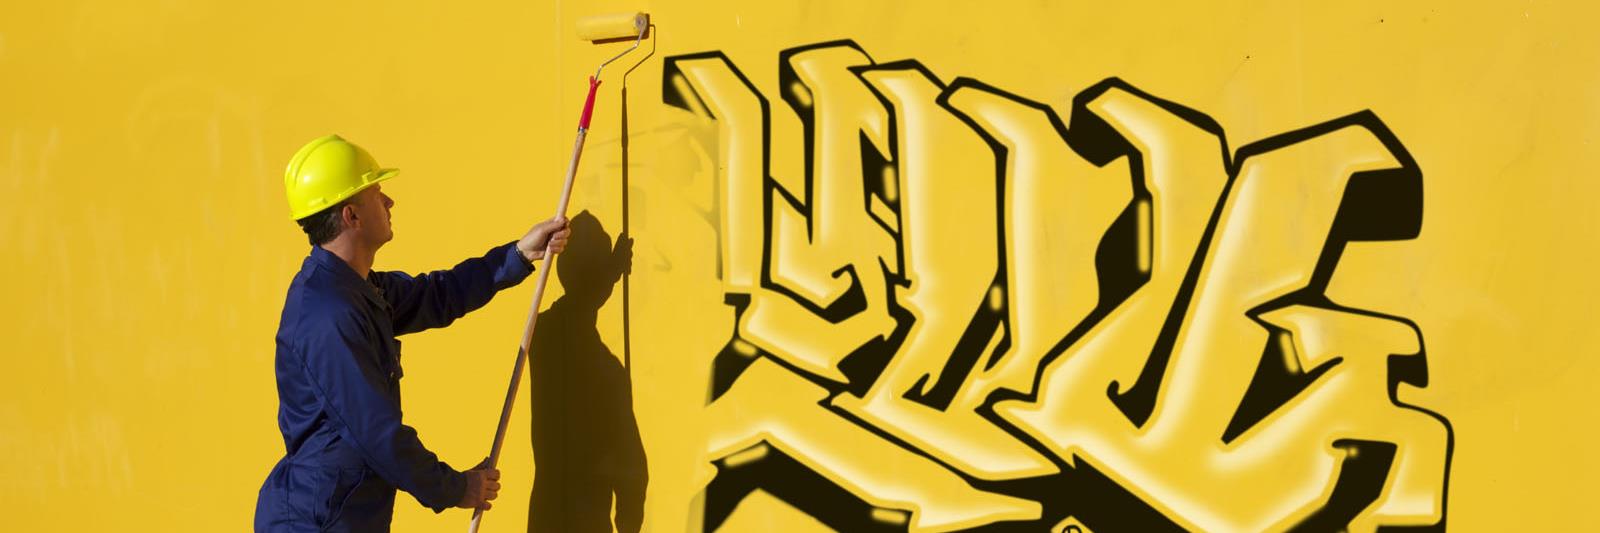 man painting over wall graffiti